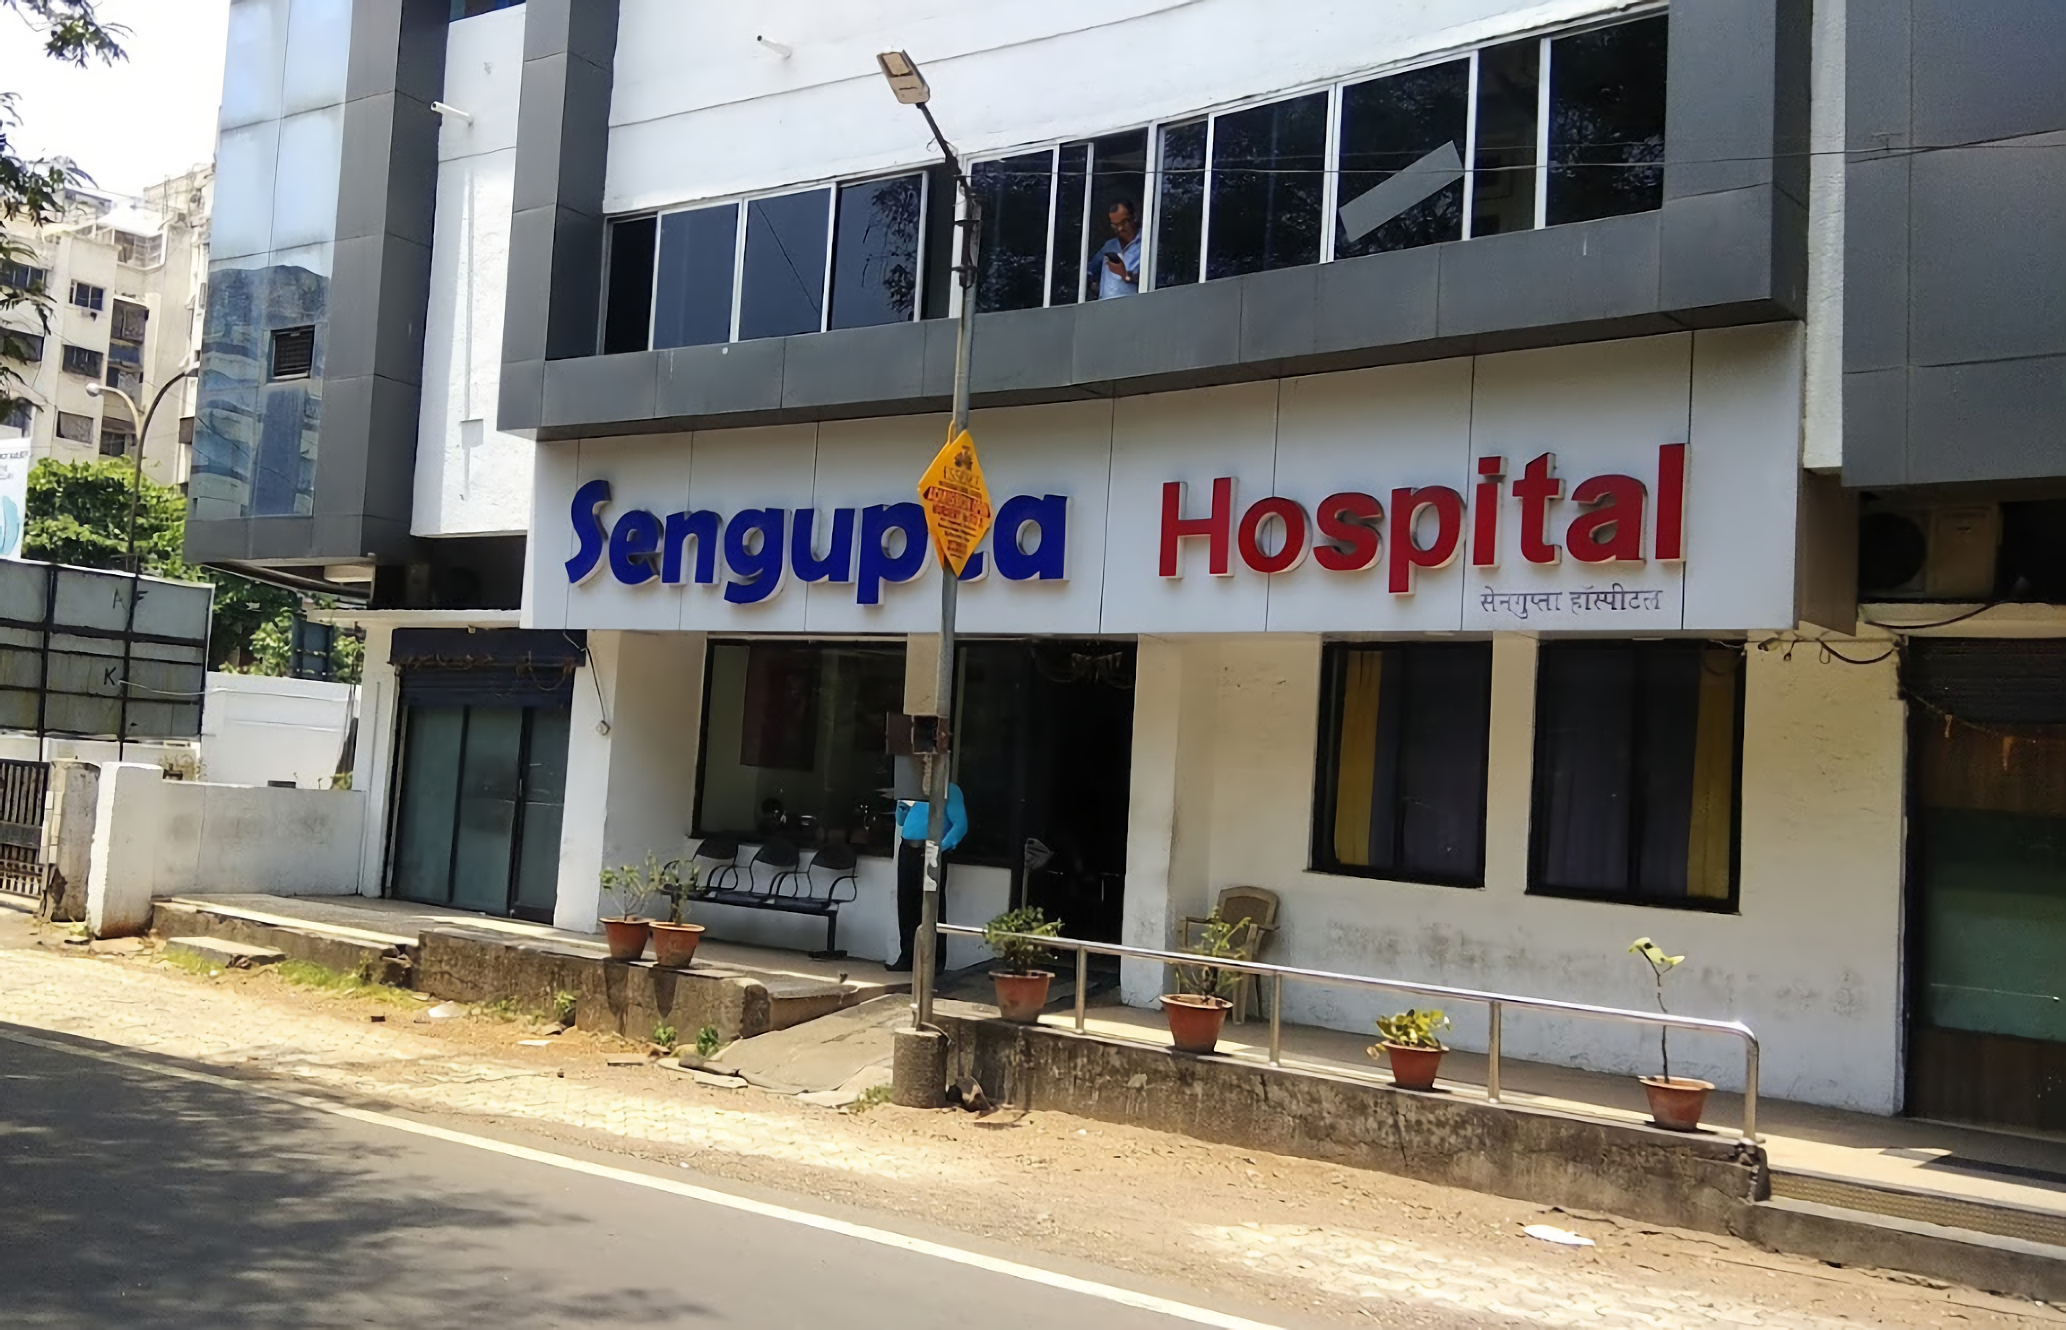 Sengupta Hospital And Research Institute